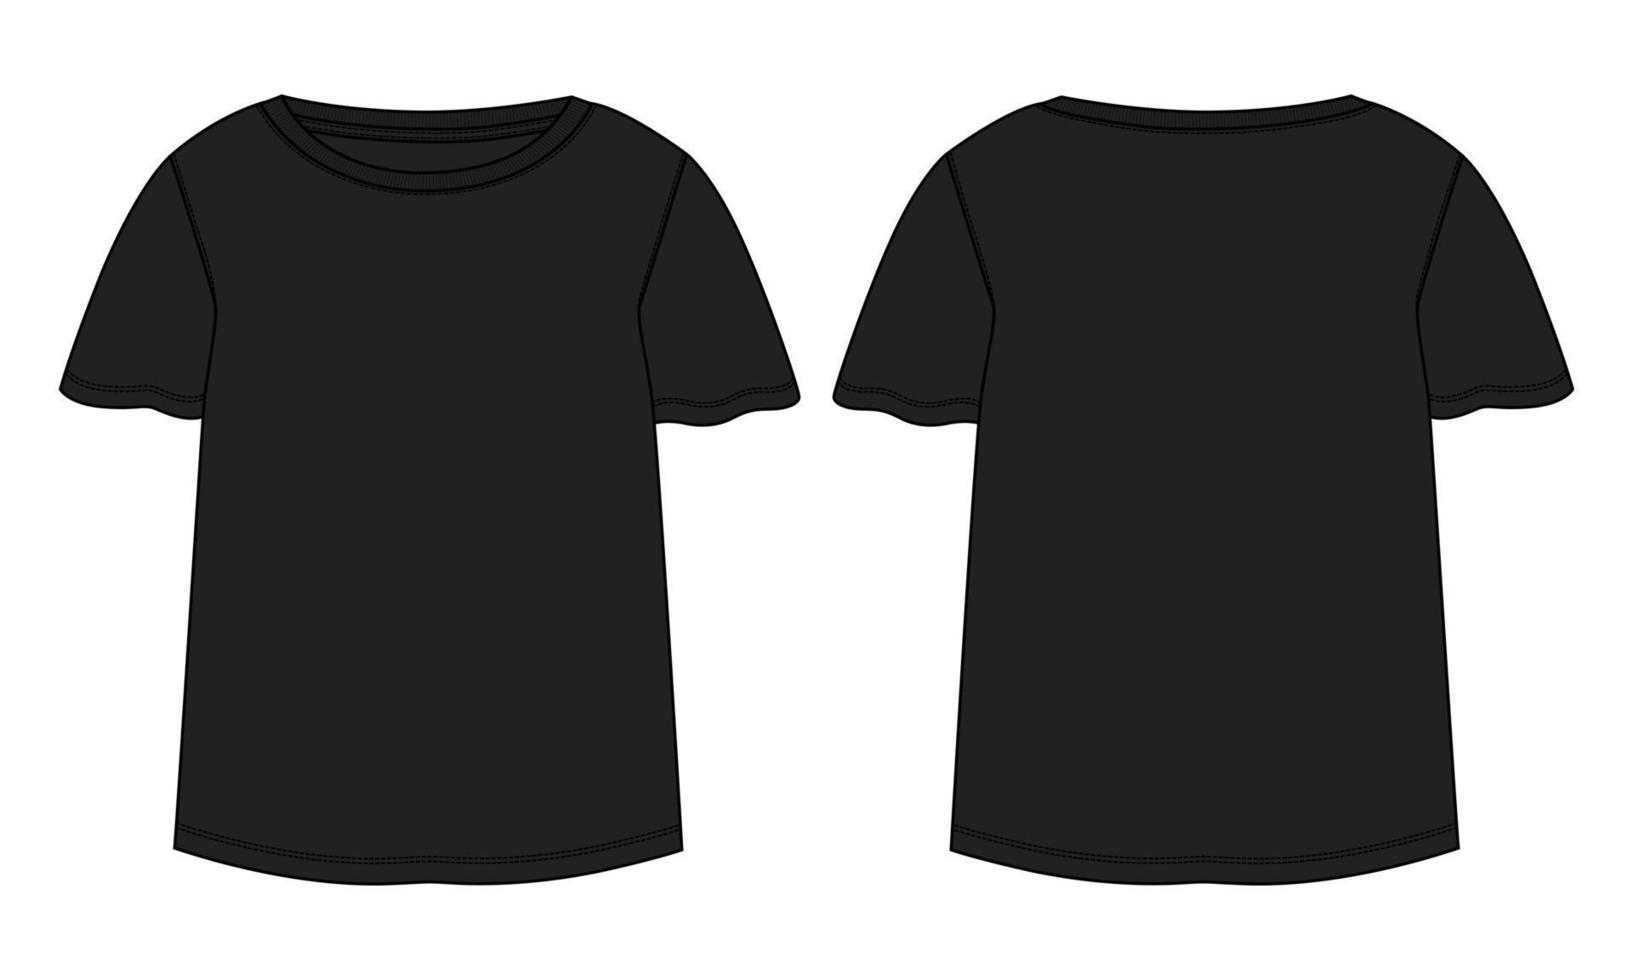 camiseta tops moda técnica boceto plano vector plantilla de color negro para damas y niñas